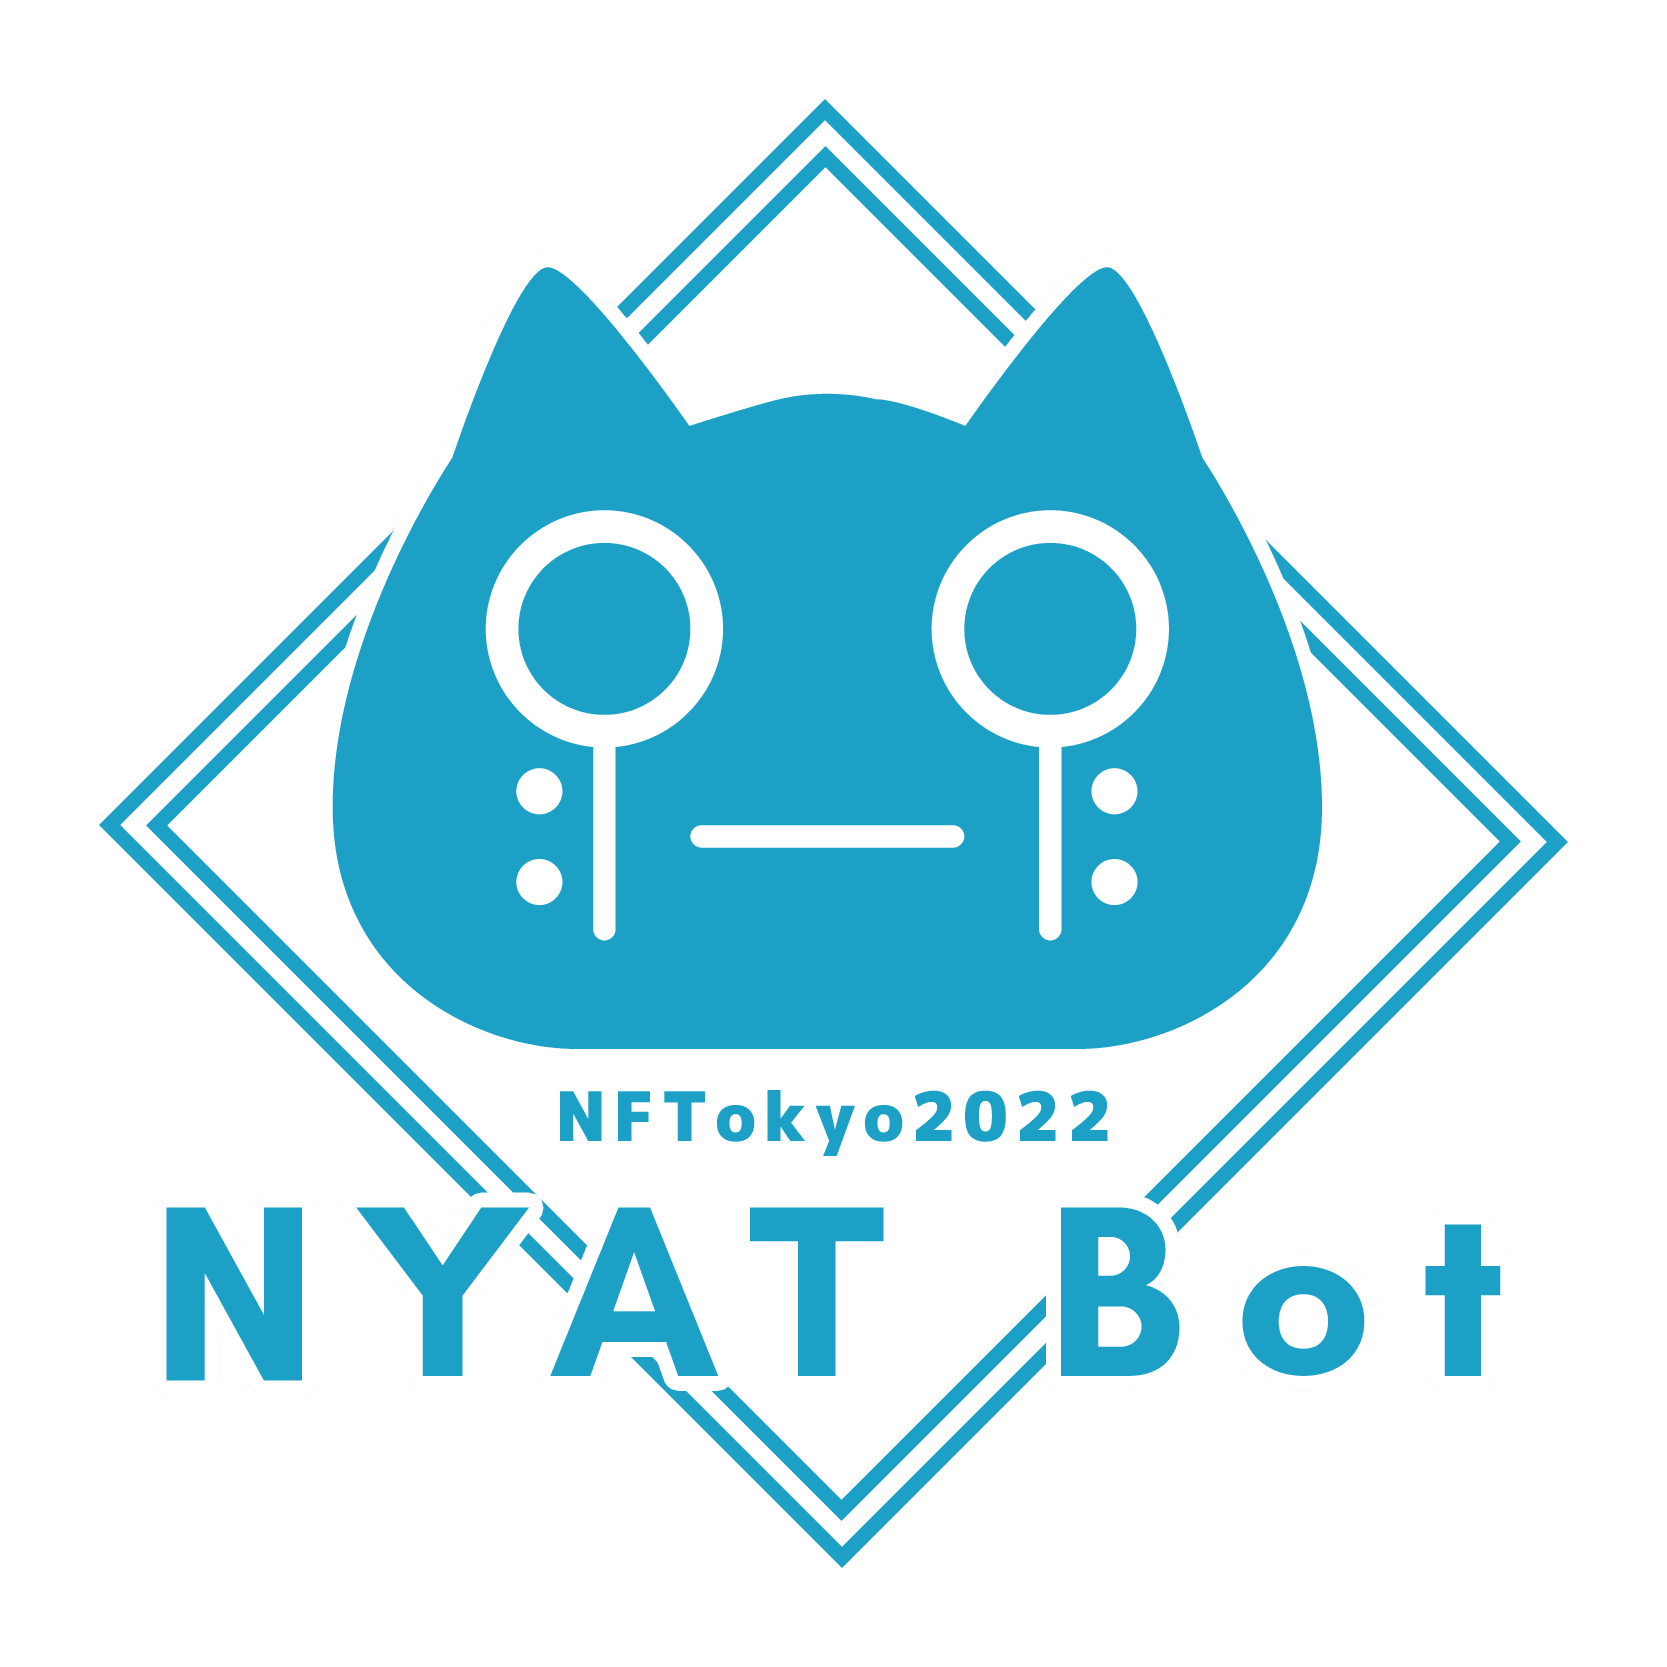 NYAT Campaign NFT - NFTokyo2022